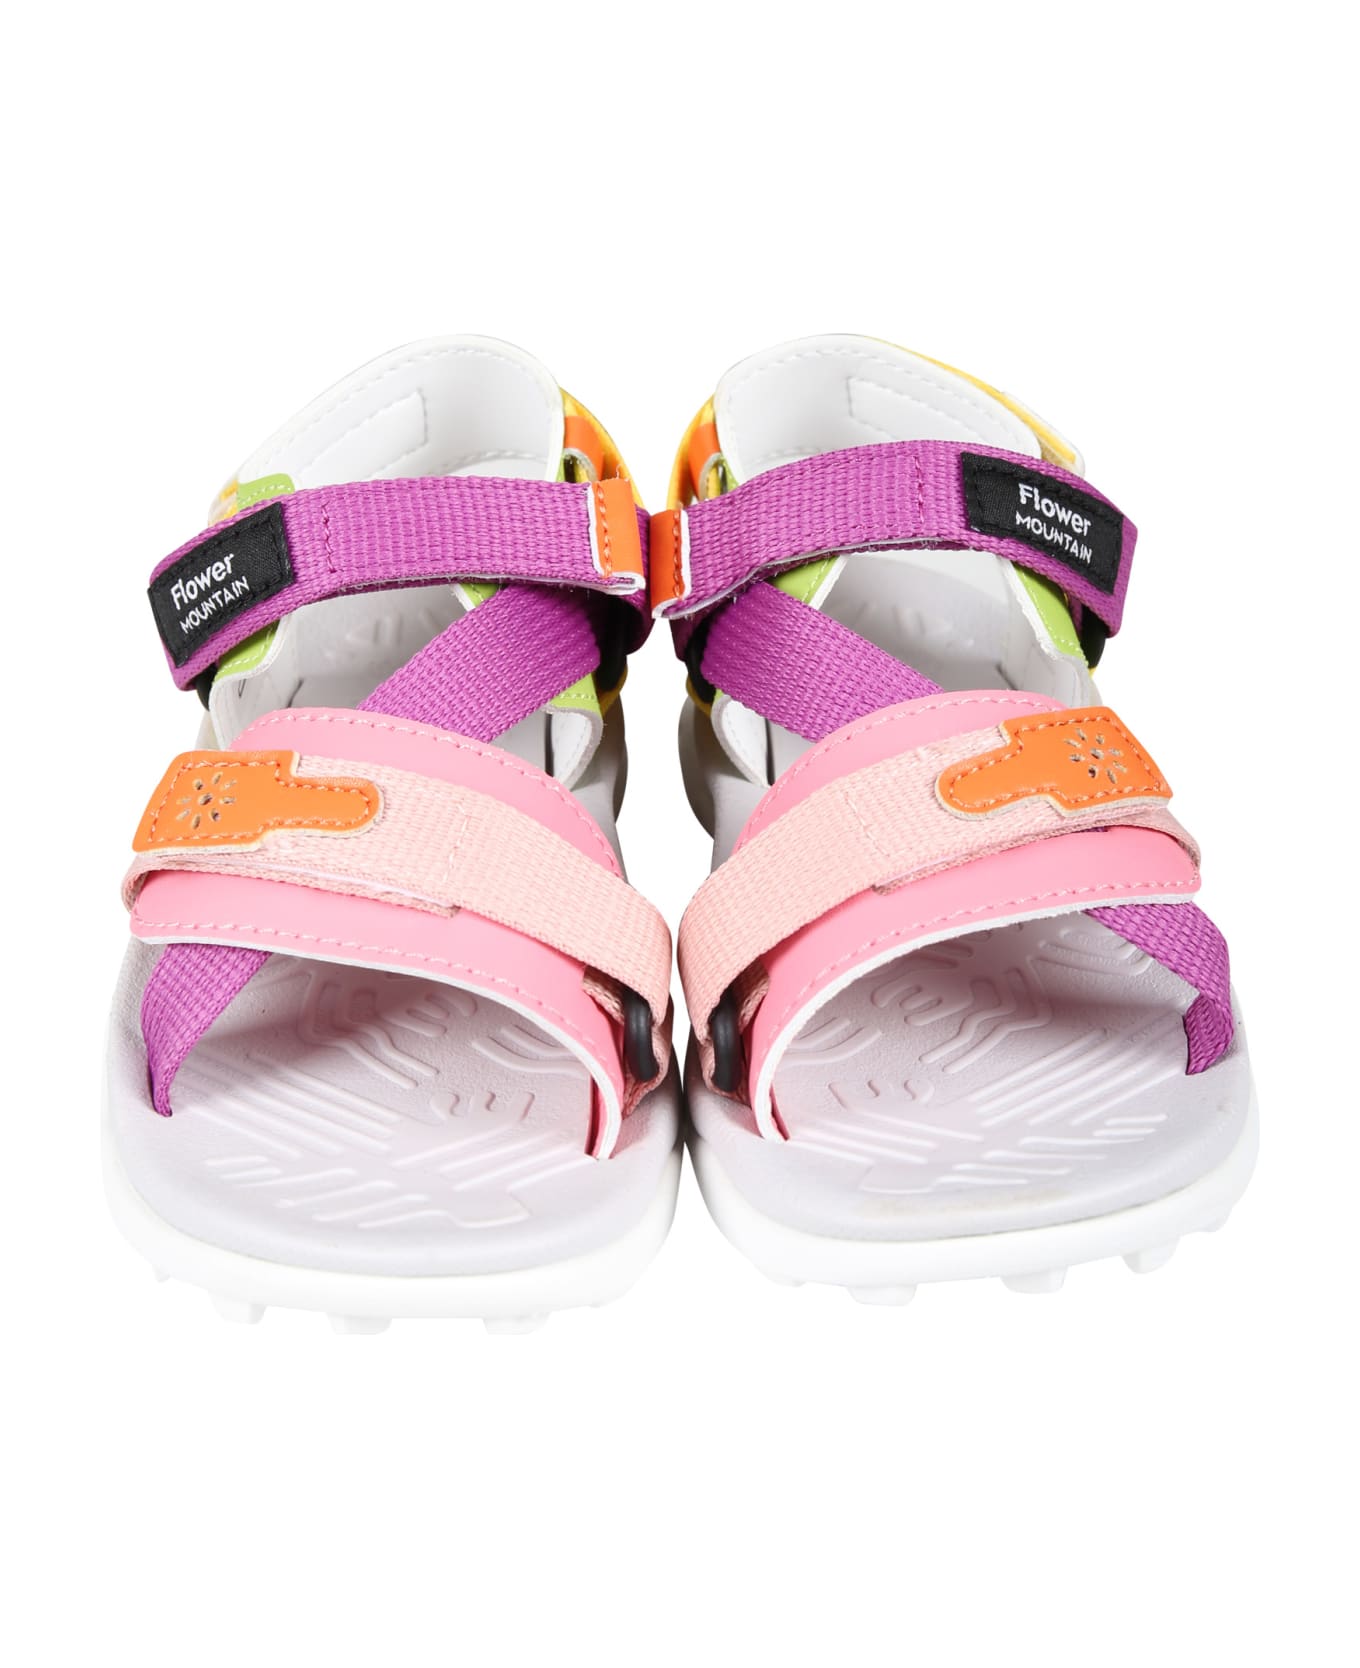 Flower Mountain Multicolor Nazca Sandals For Girl - Multicolor